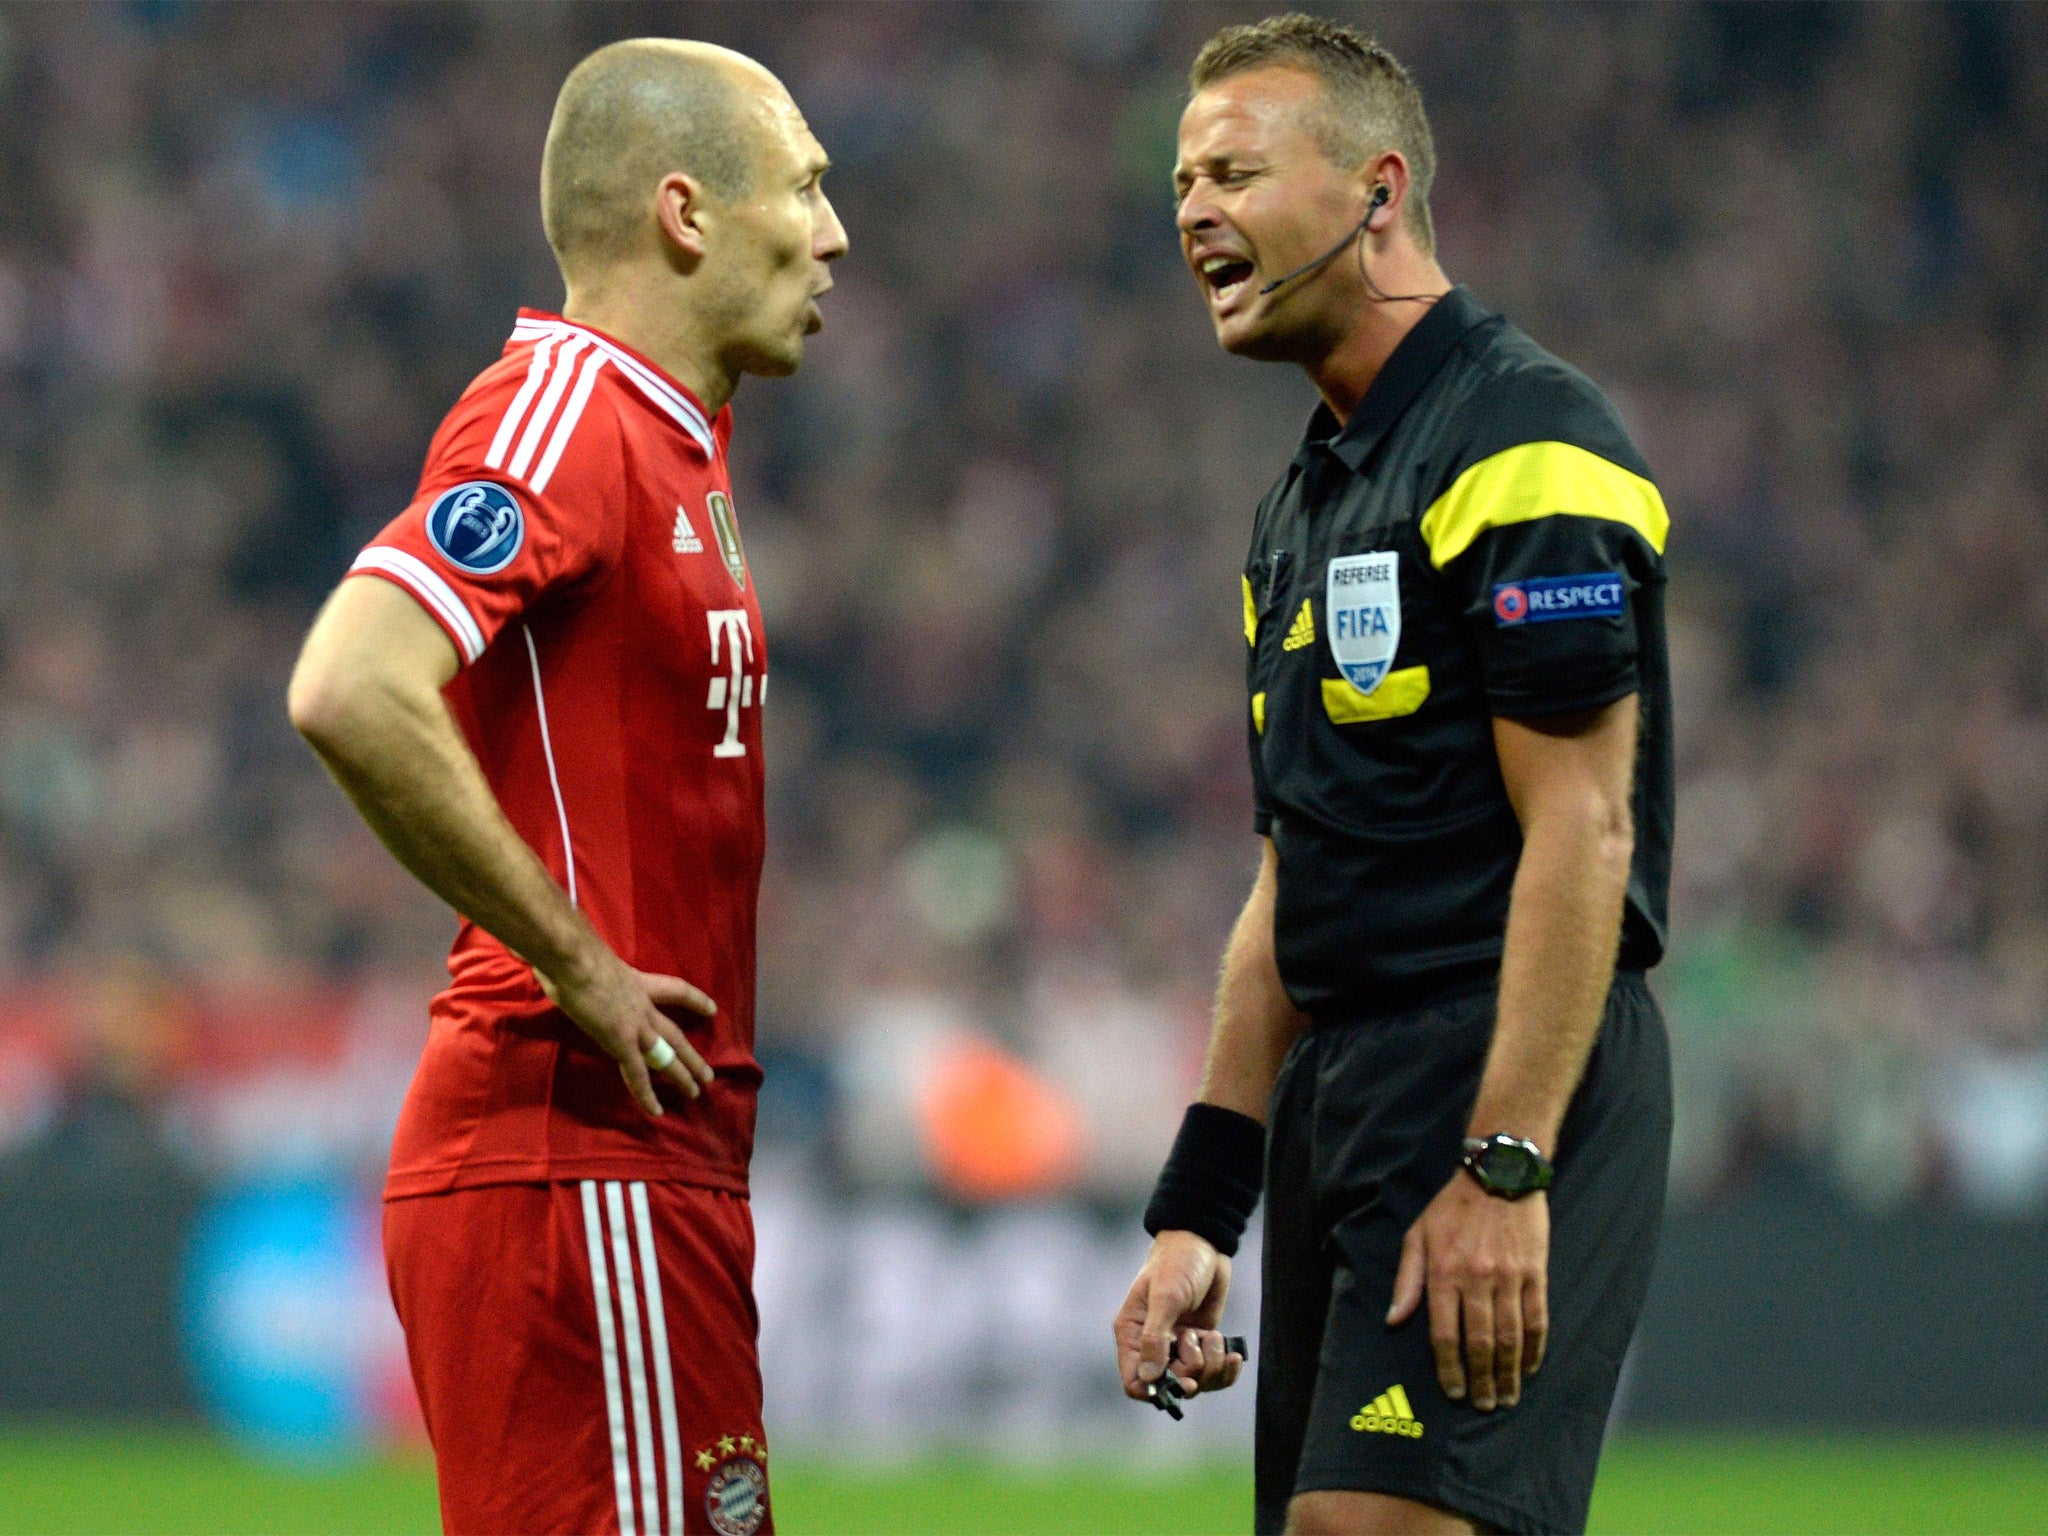 Arjen Robben speaks with referee Svein Oddvar Moen